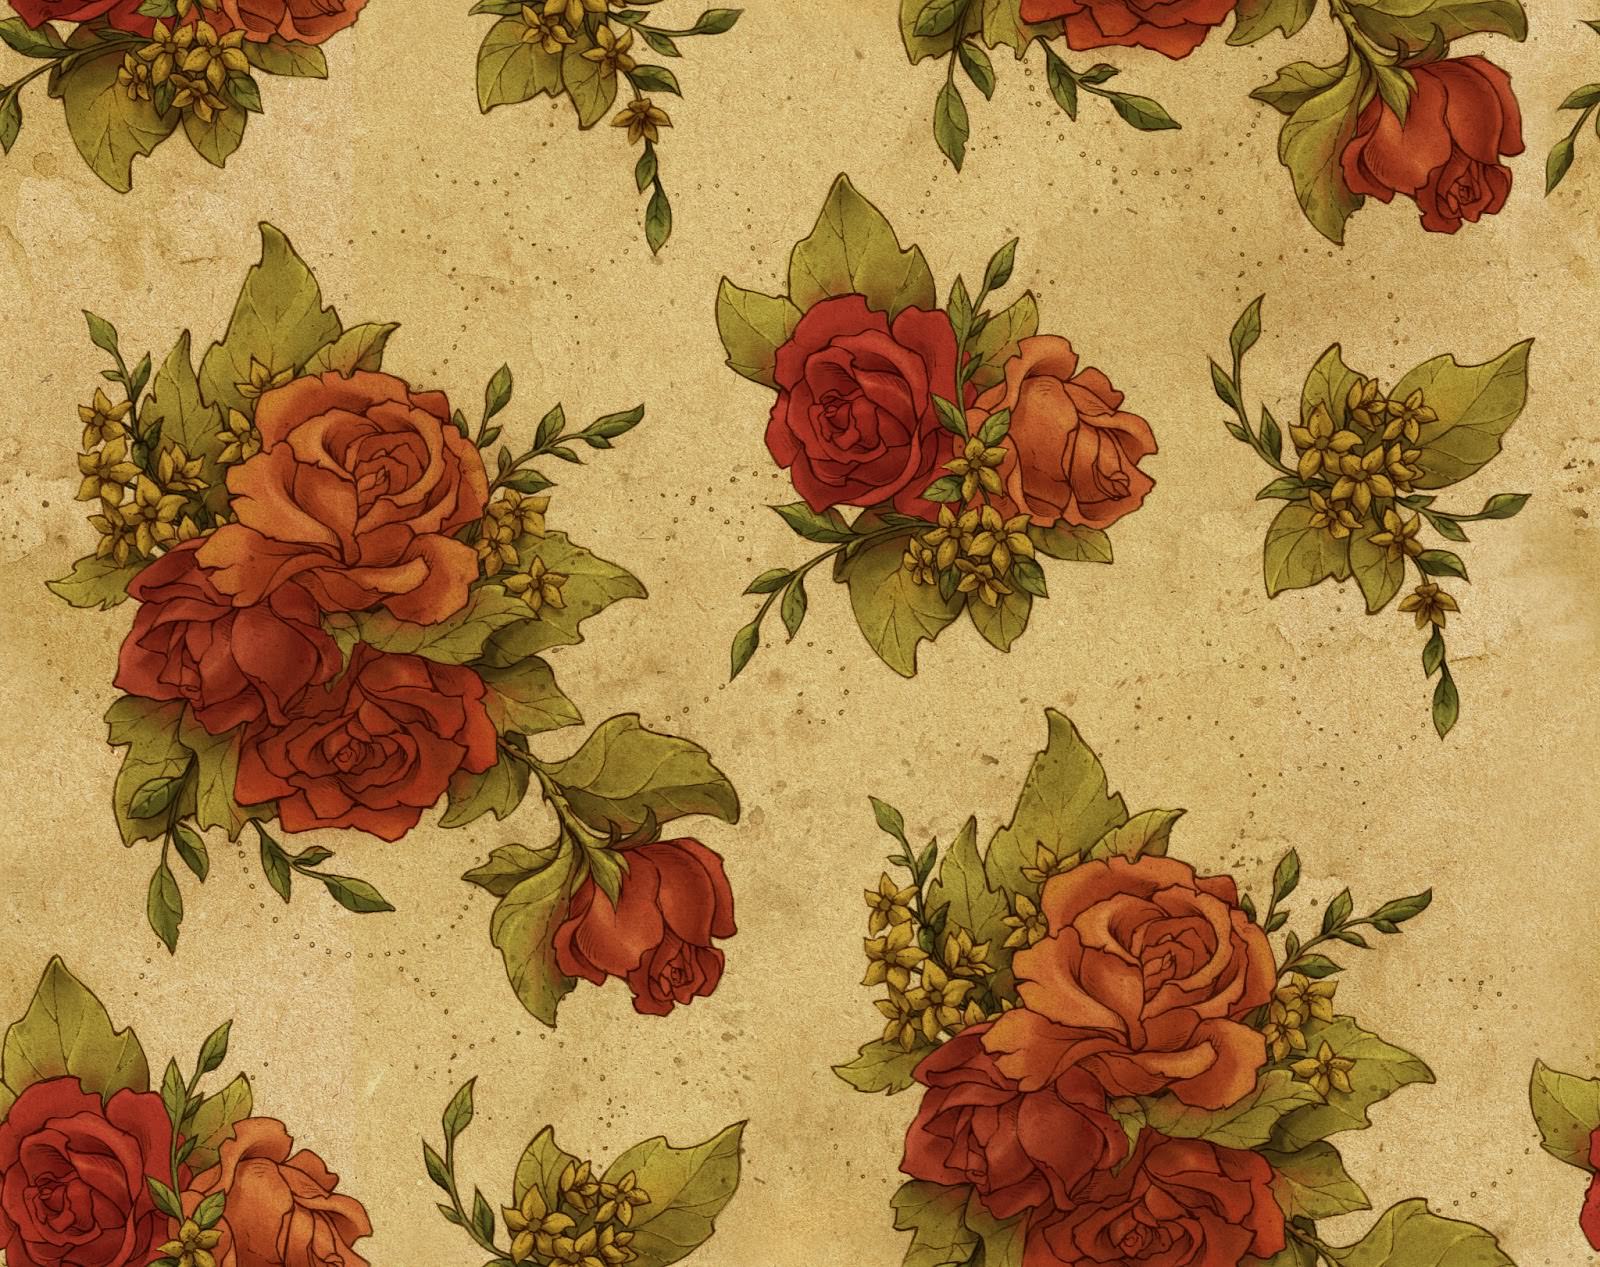 Download 15+ Free Floral Vintage Wallpapers